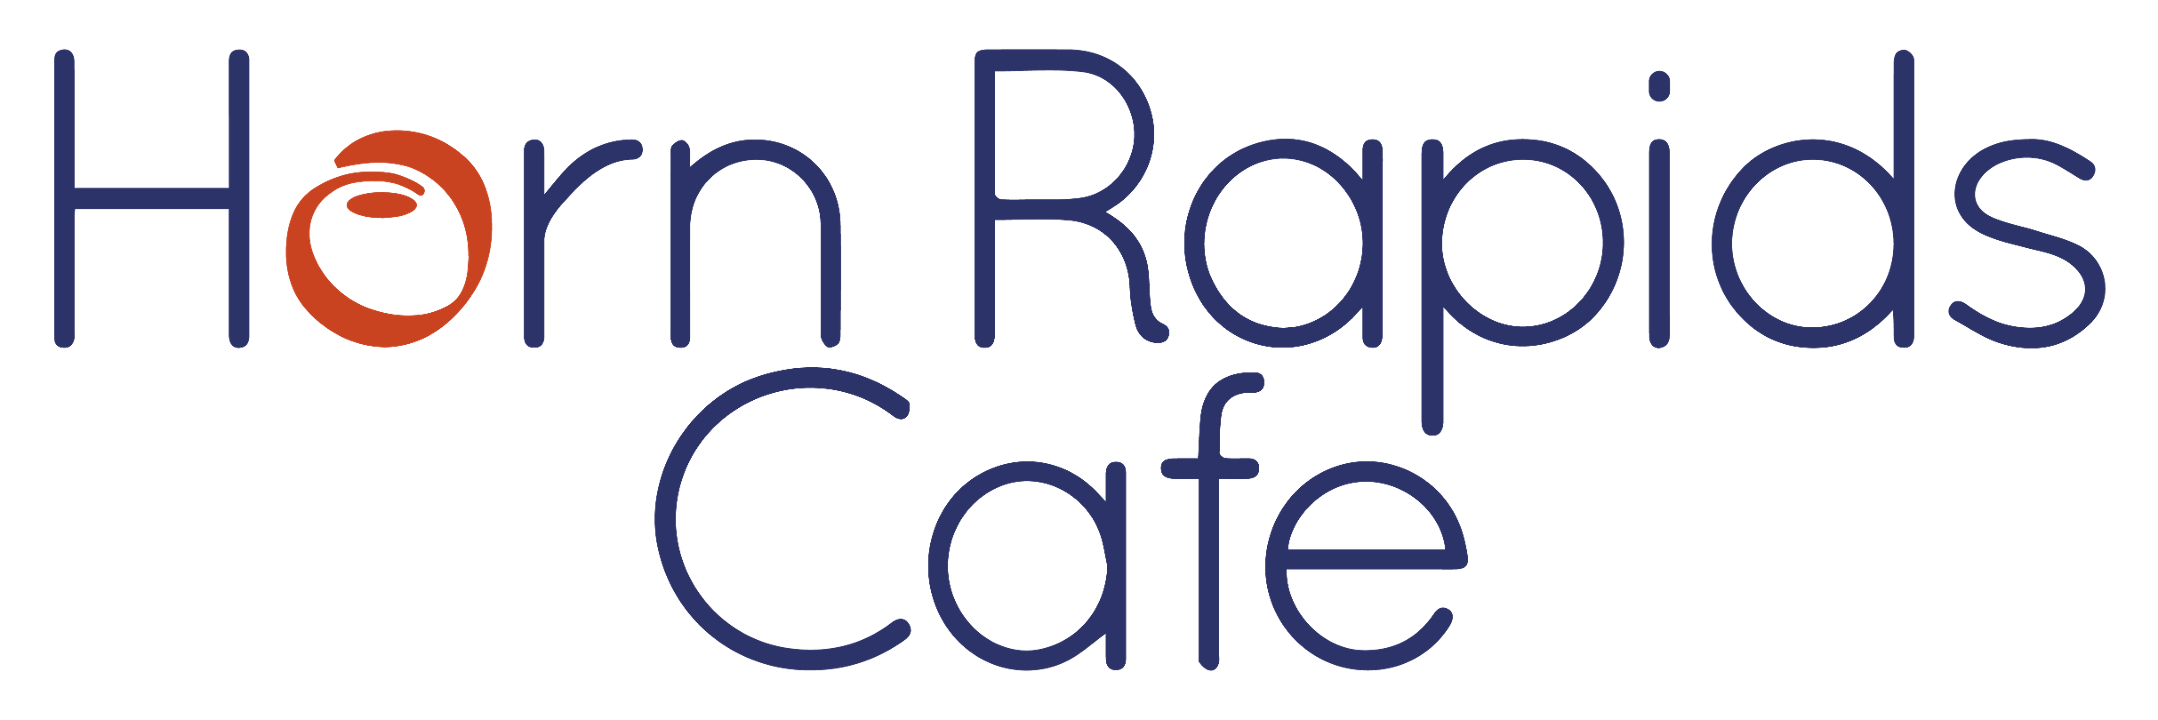 Horn Rapids Cafe 